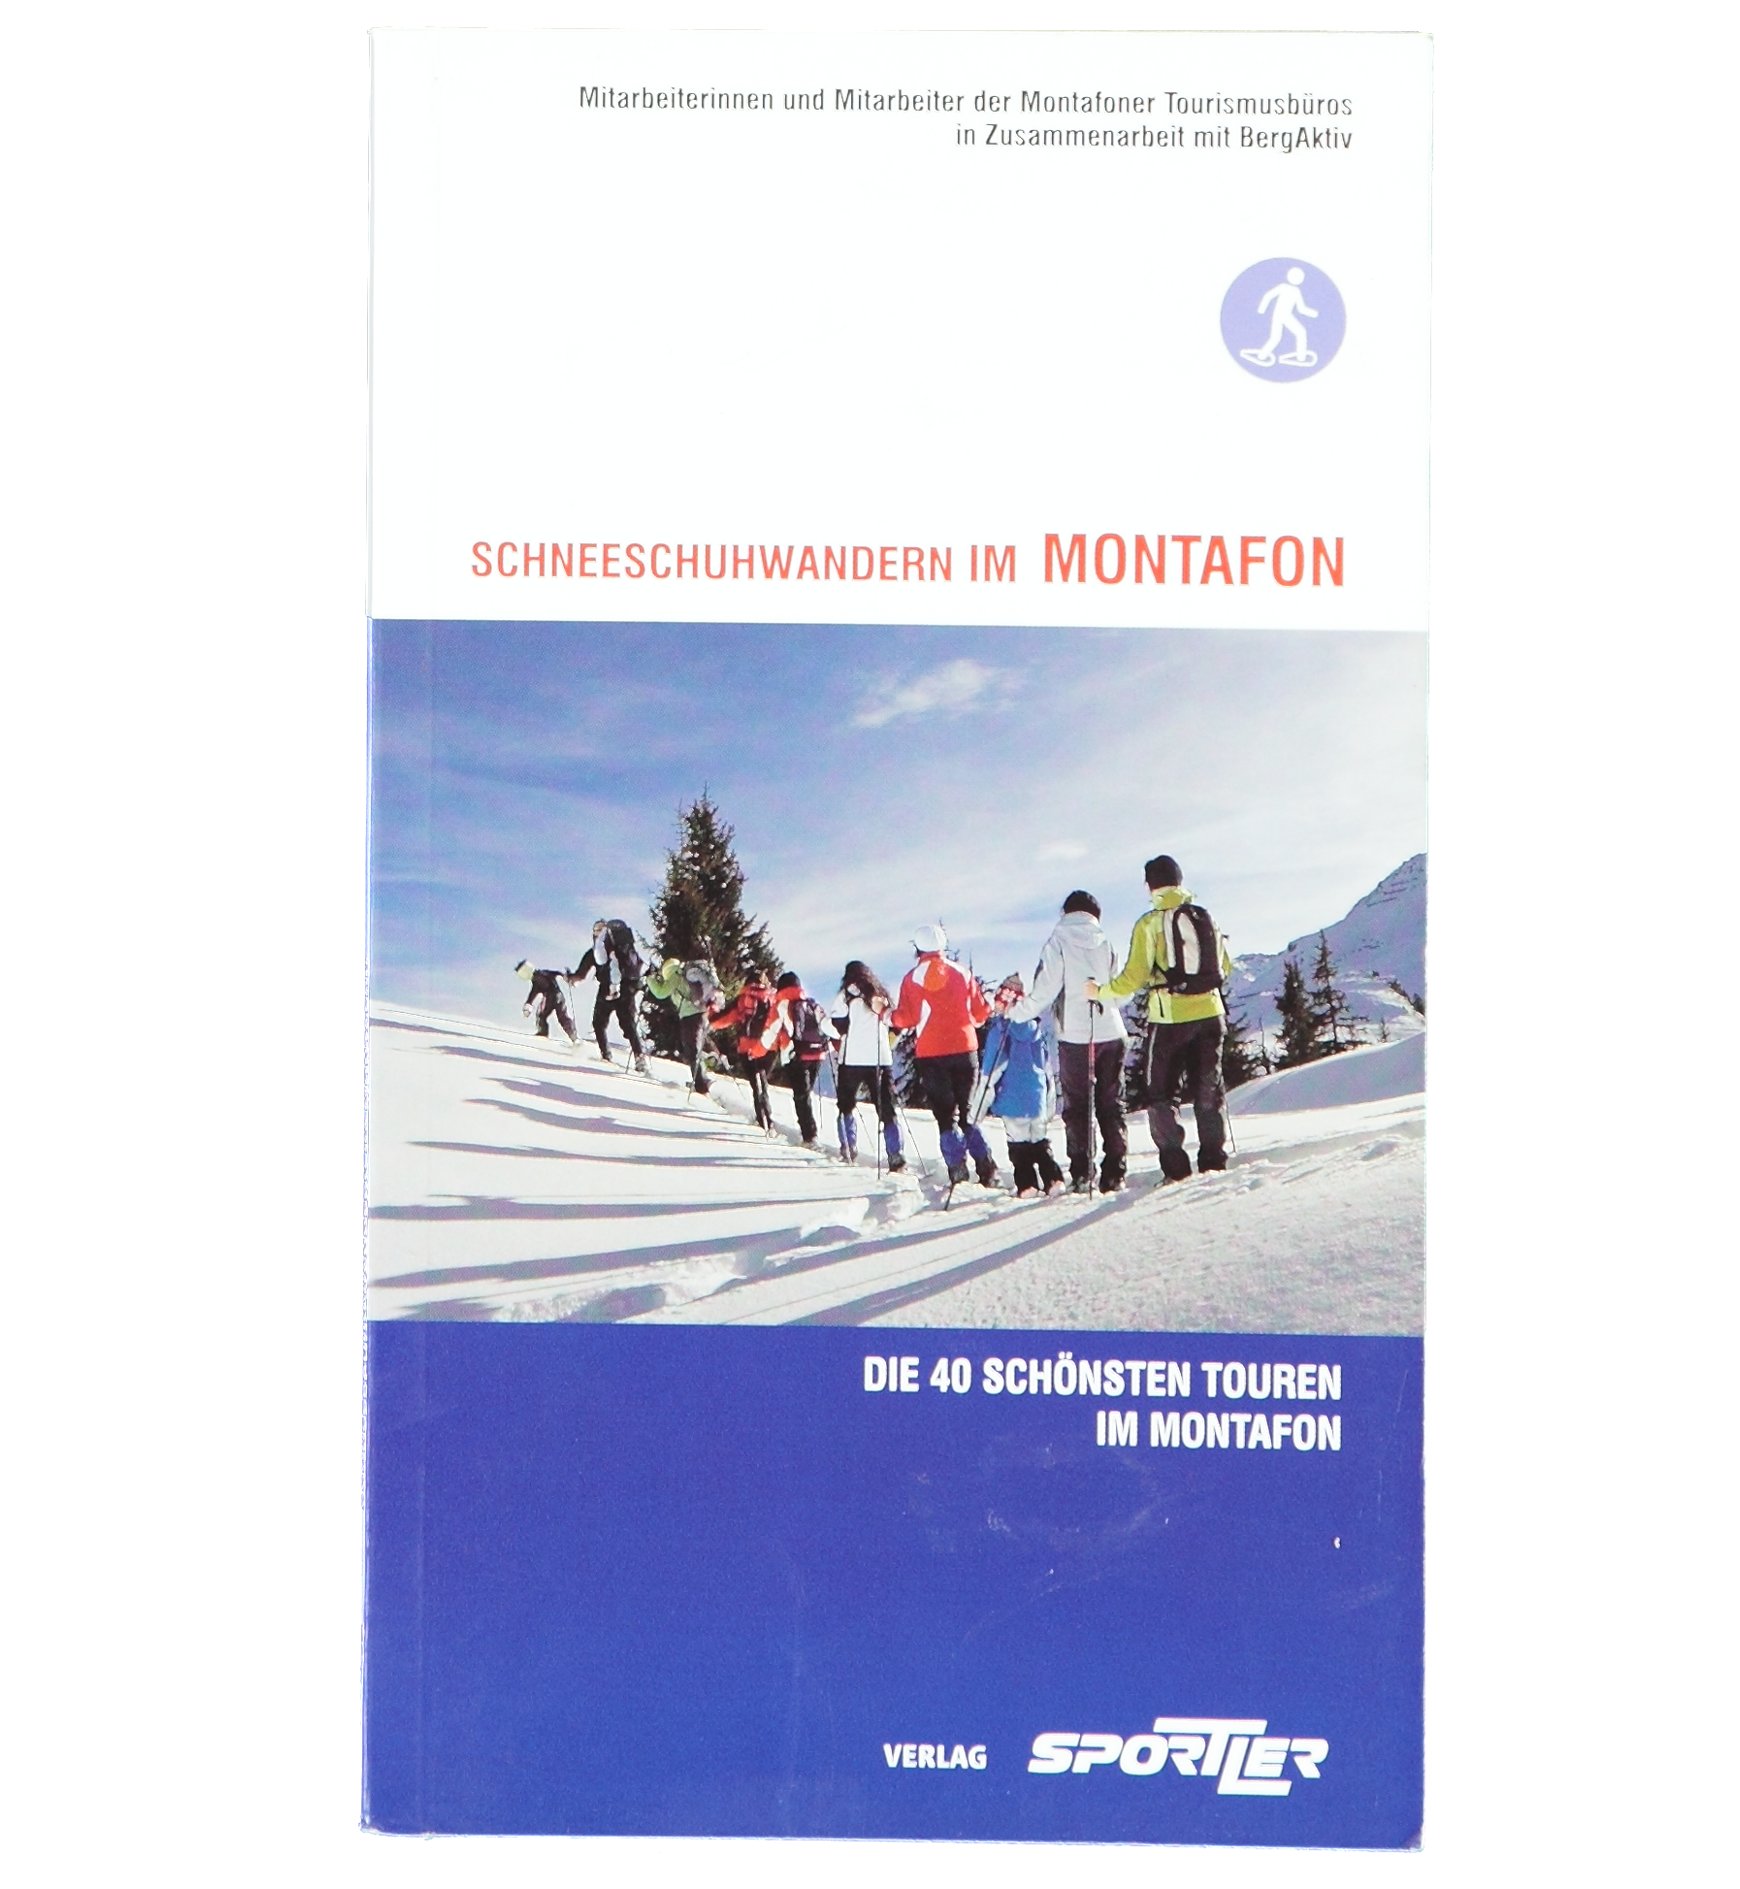 Sportler Schneeschuhwandern in Montafon Führer